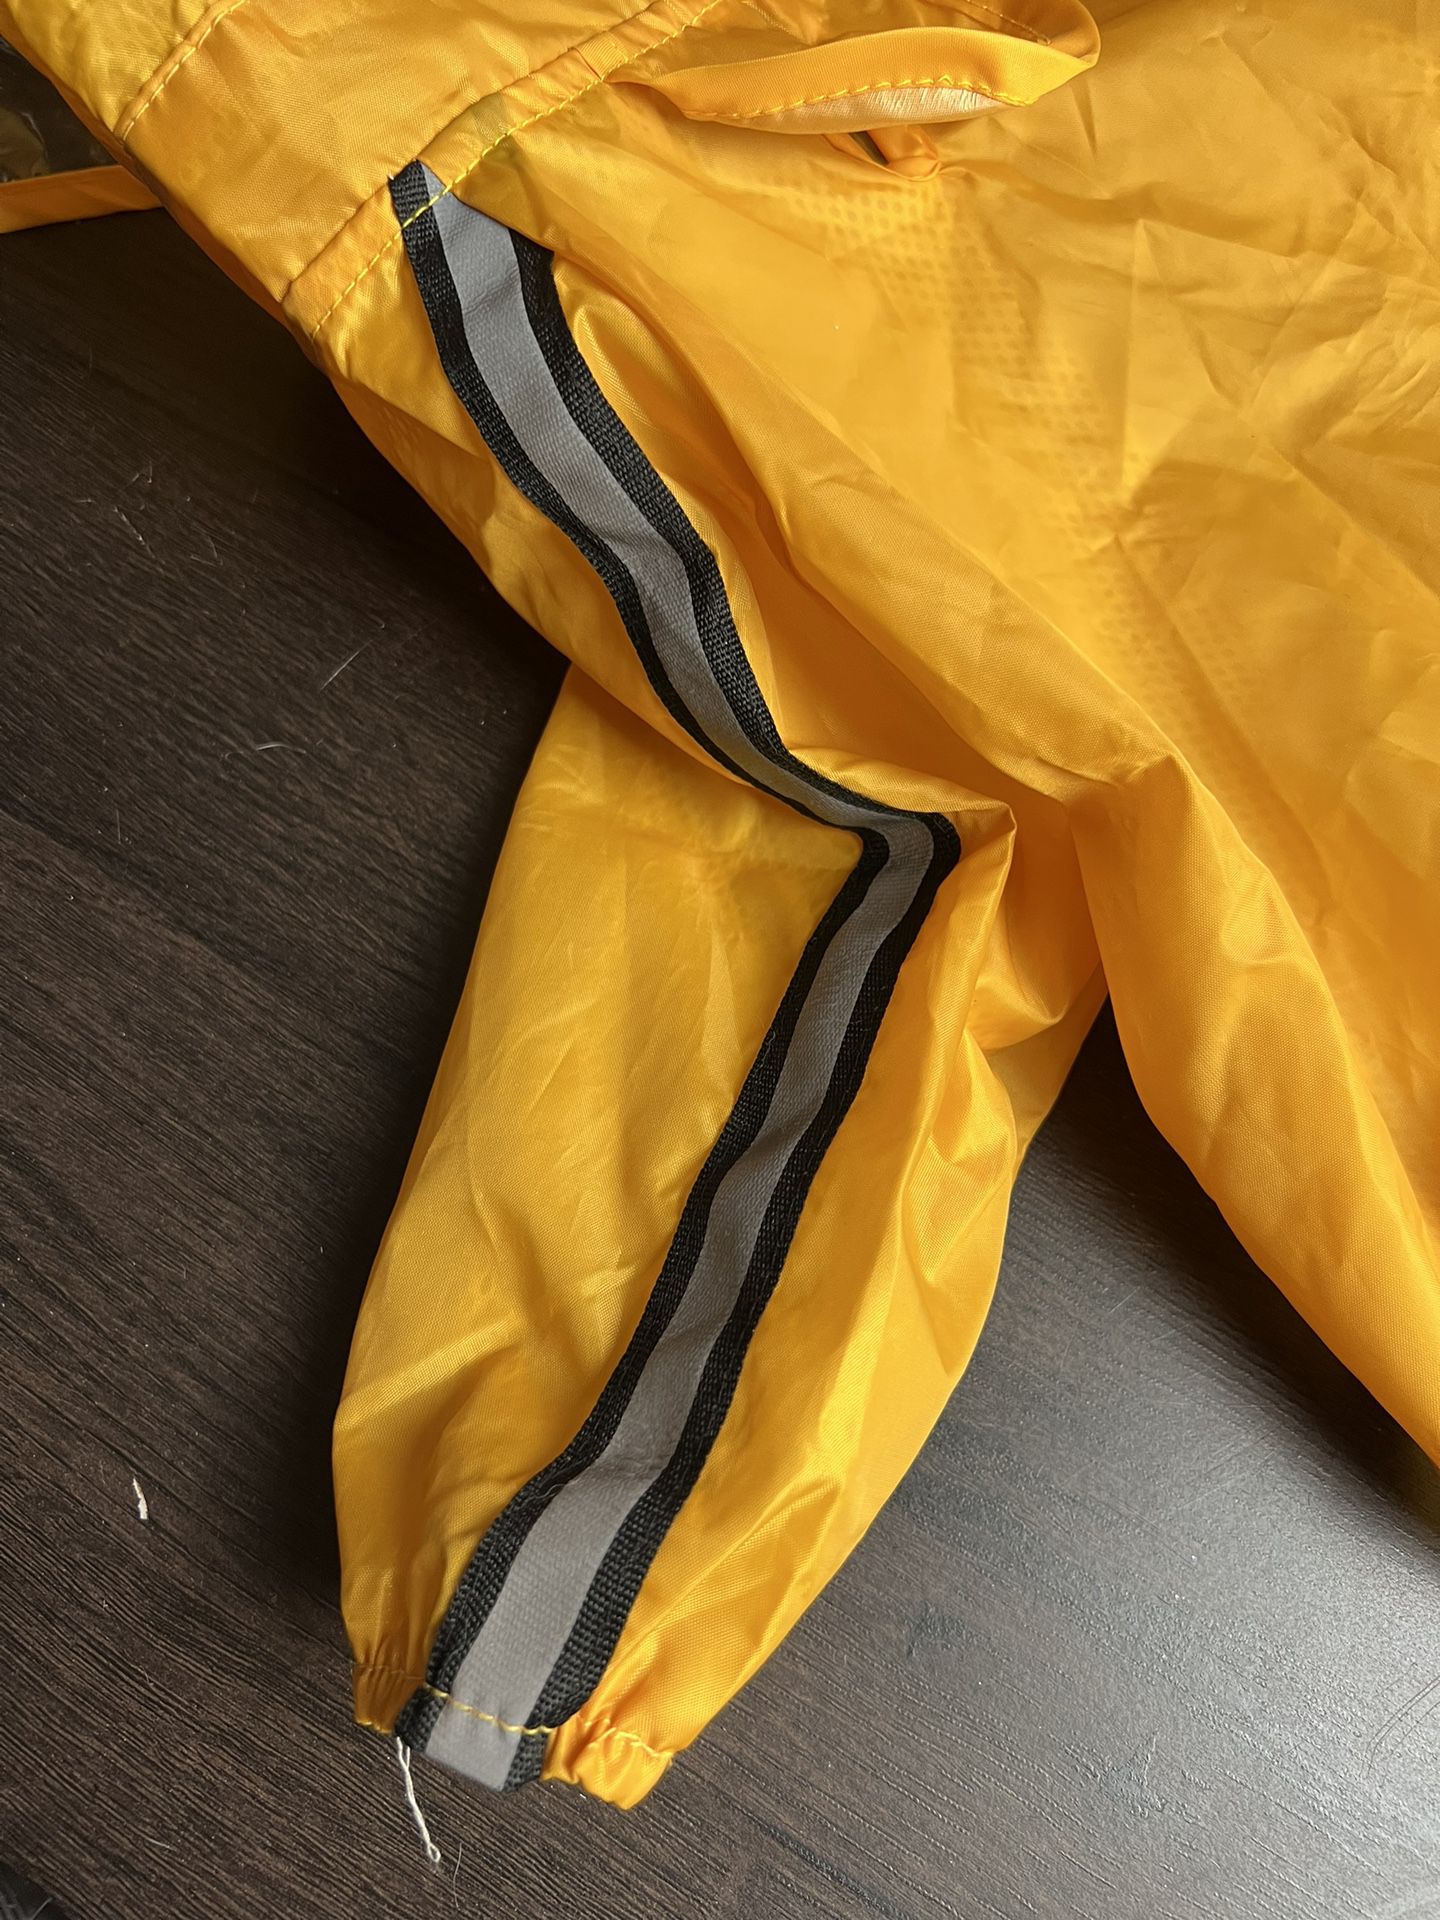 Louis Vuitton Silver Foil Dog Raincoat Size Medium for Sale in Bellevue, WA  - OfferUp